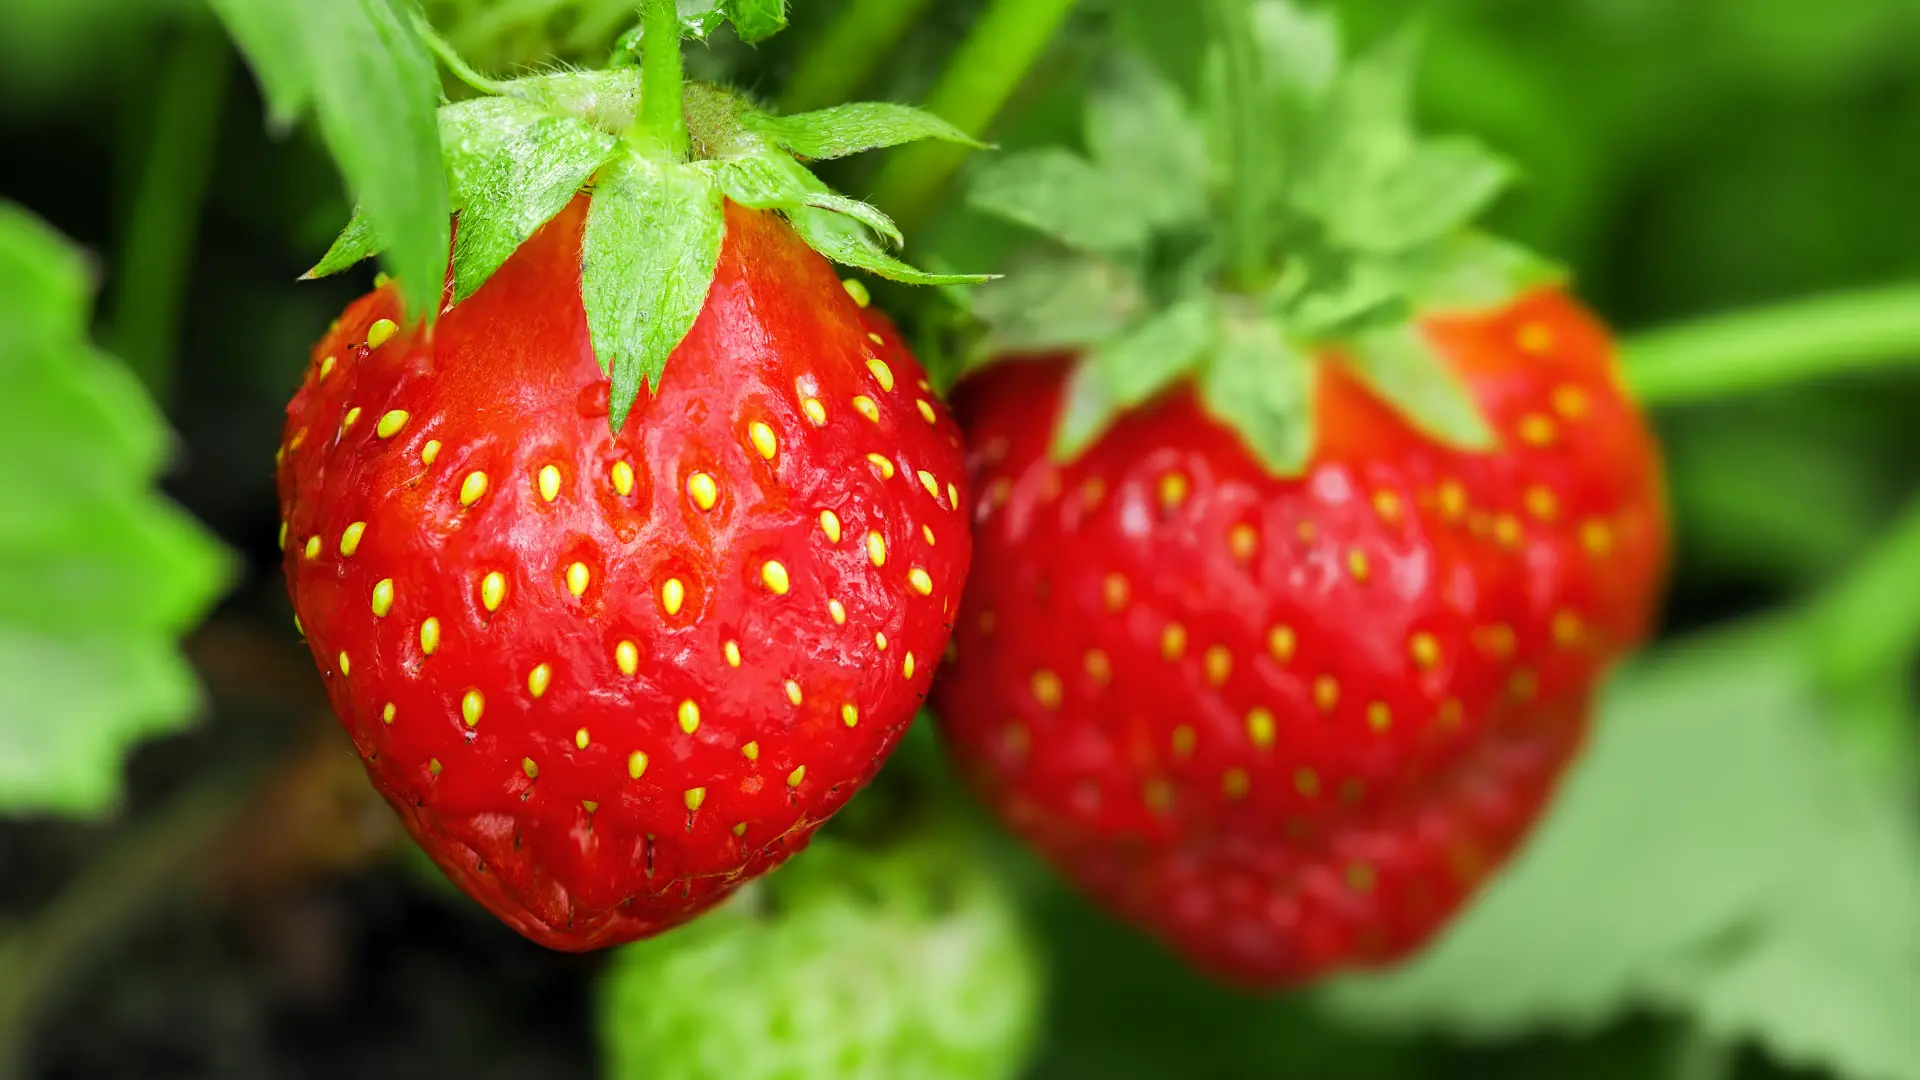 Healthy strawberries